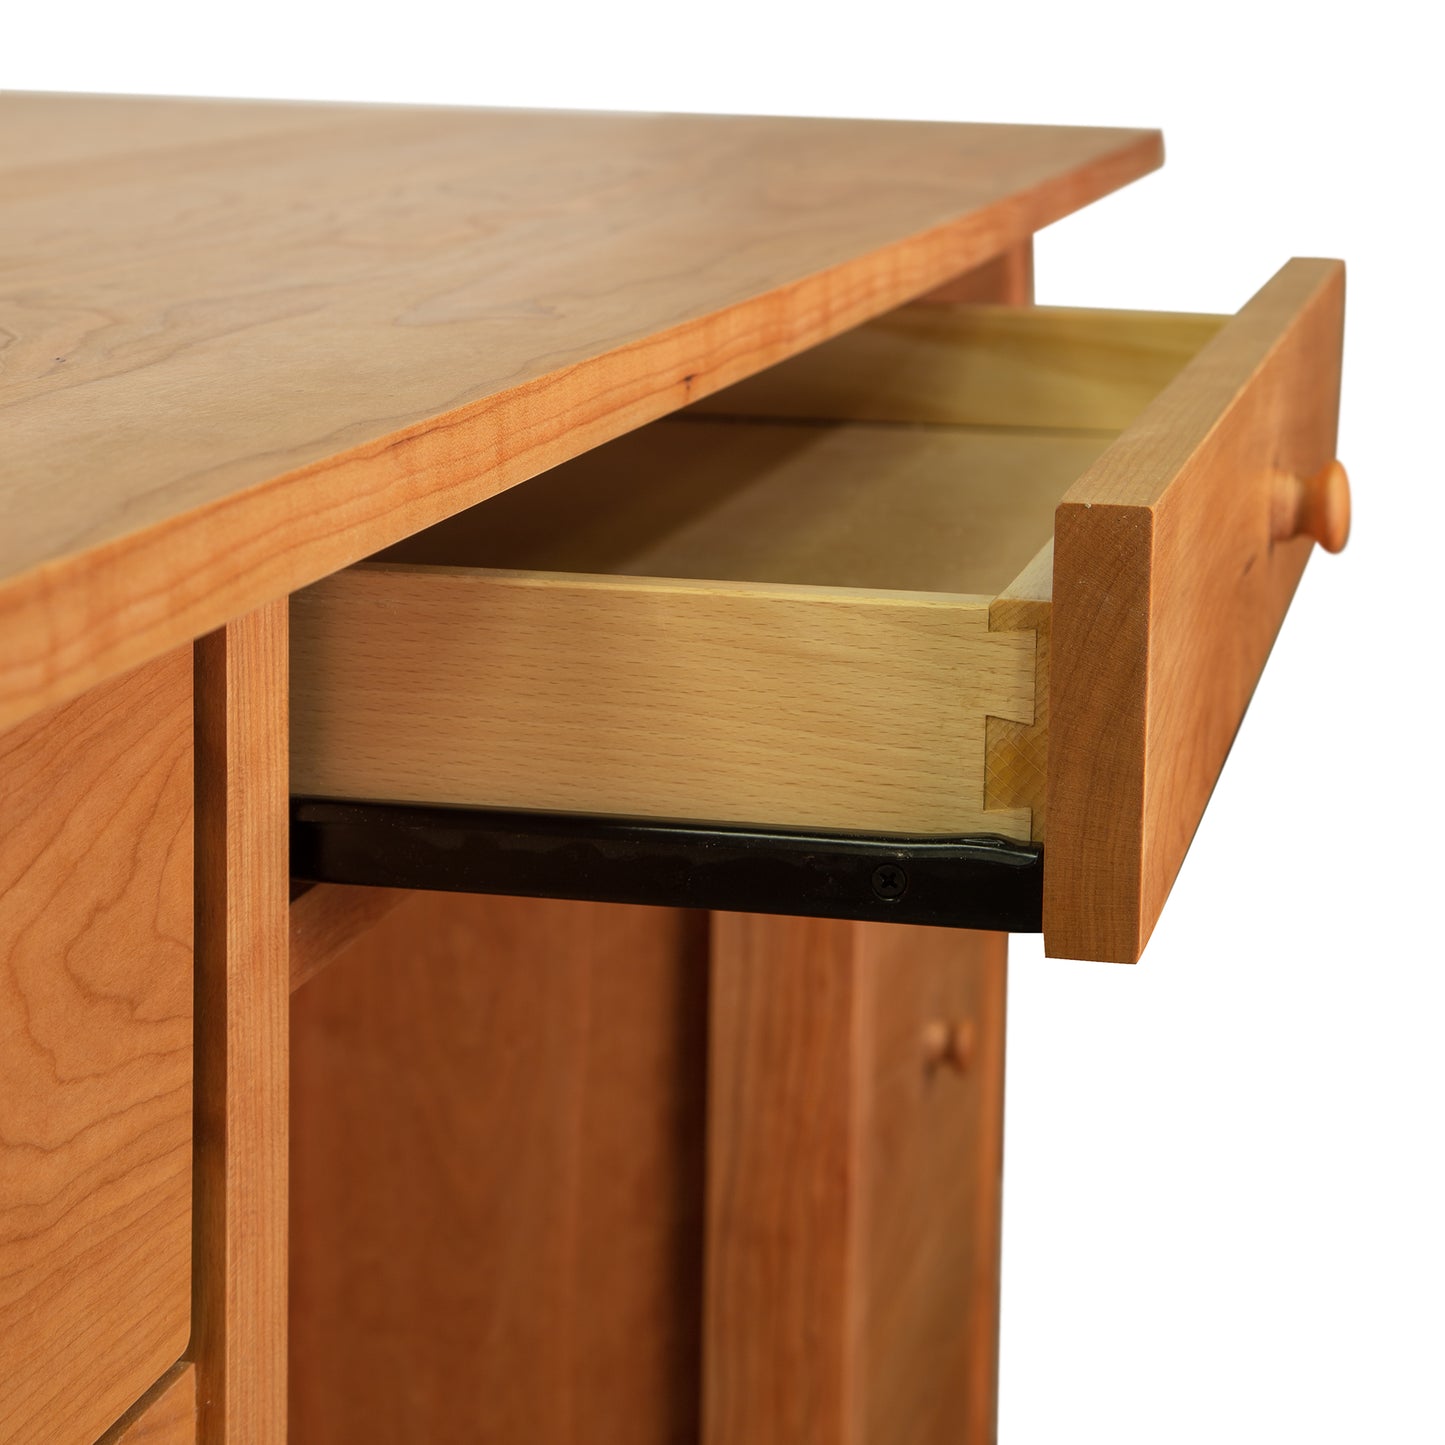 A drawer is open on a Vermont Furniture Designs Burlington Shaker Executive Desk - Floor Model.